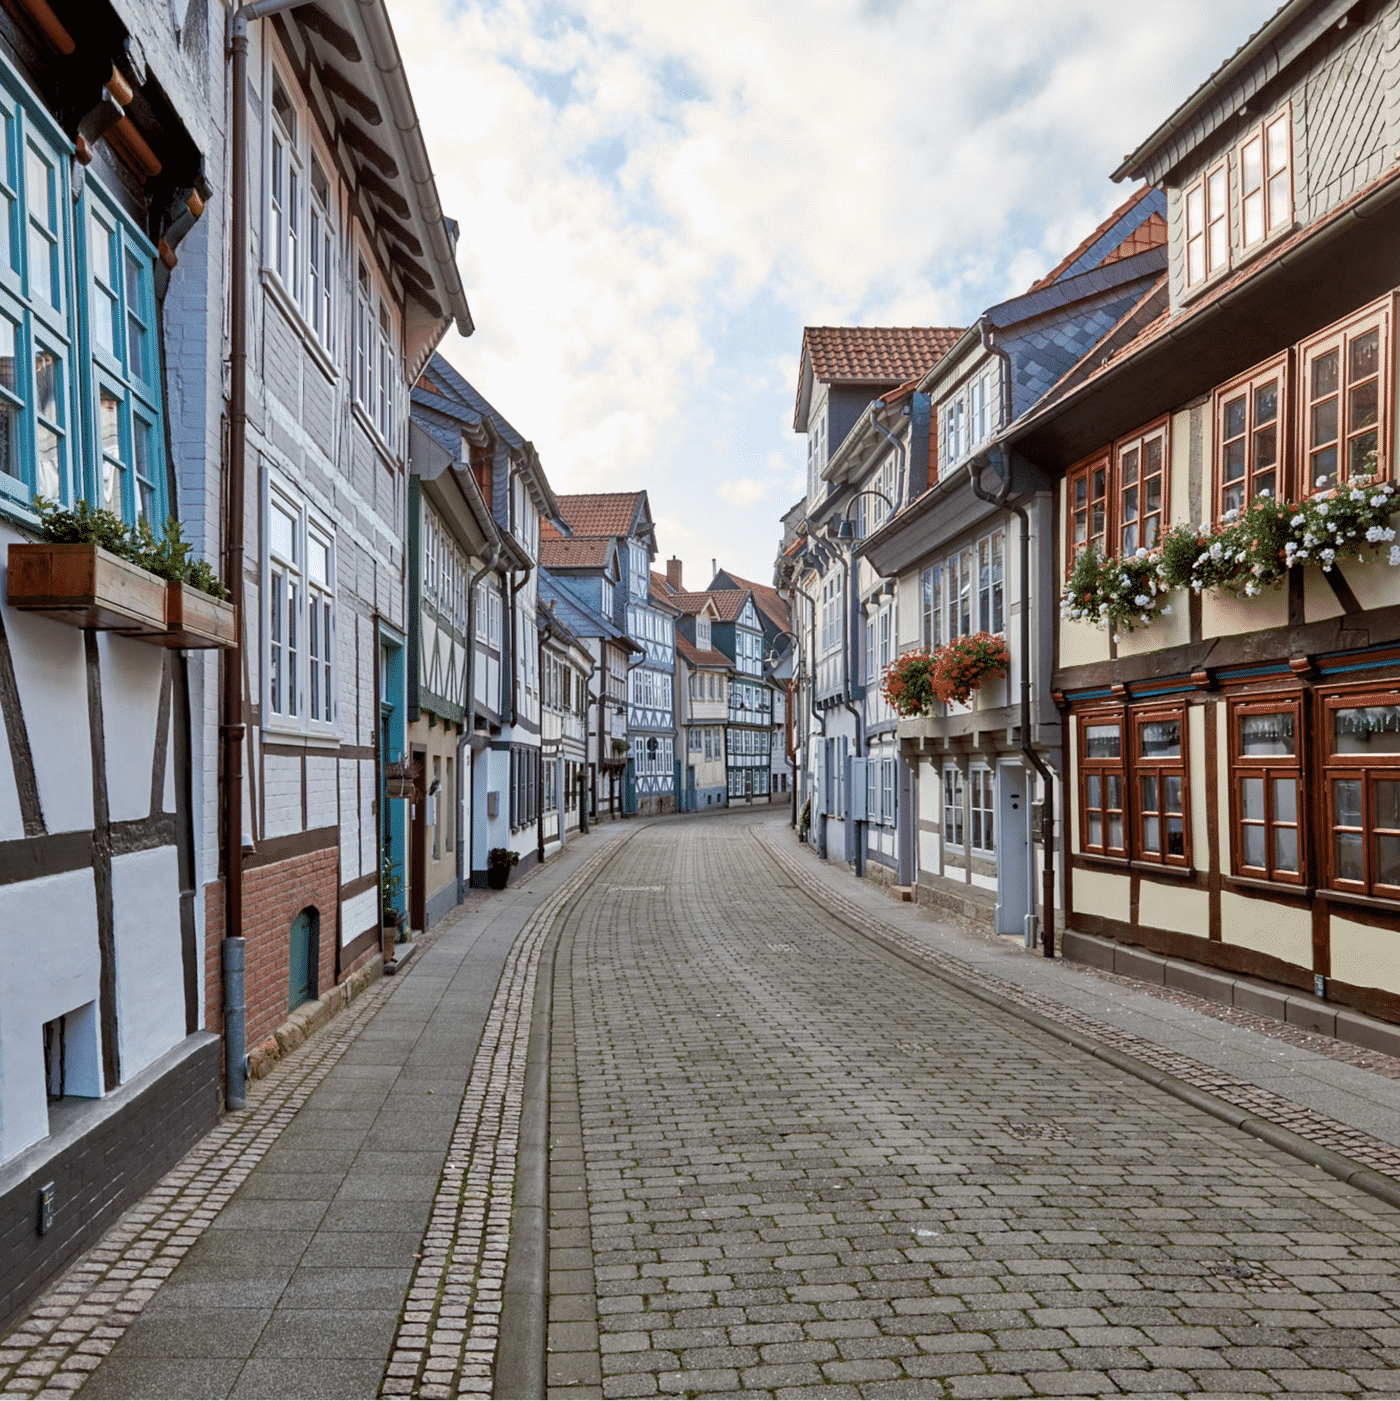 Oppdag Wolfenbüttel
ditt Wolfenbüttel.